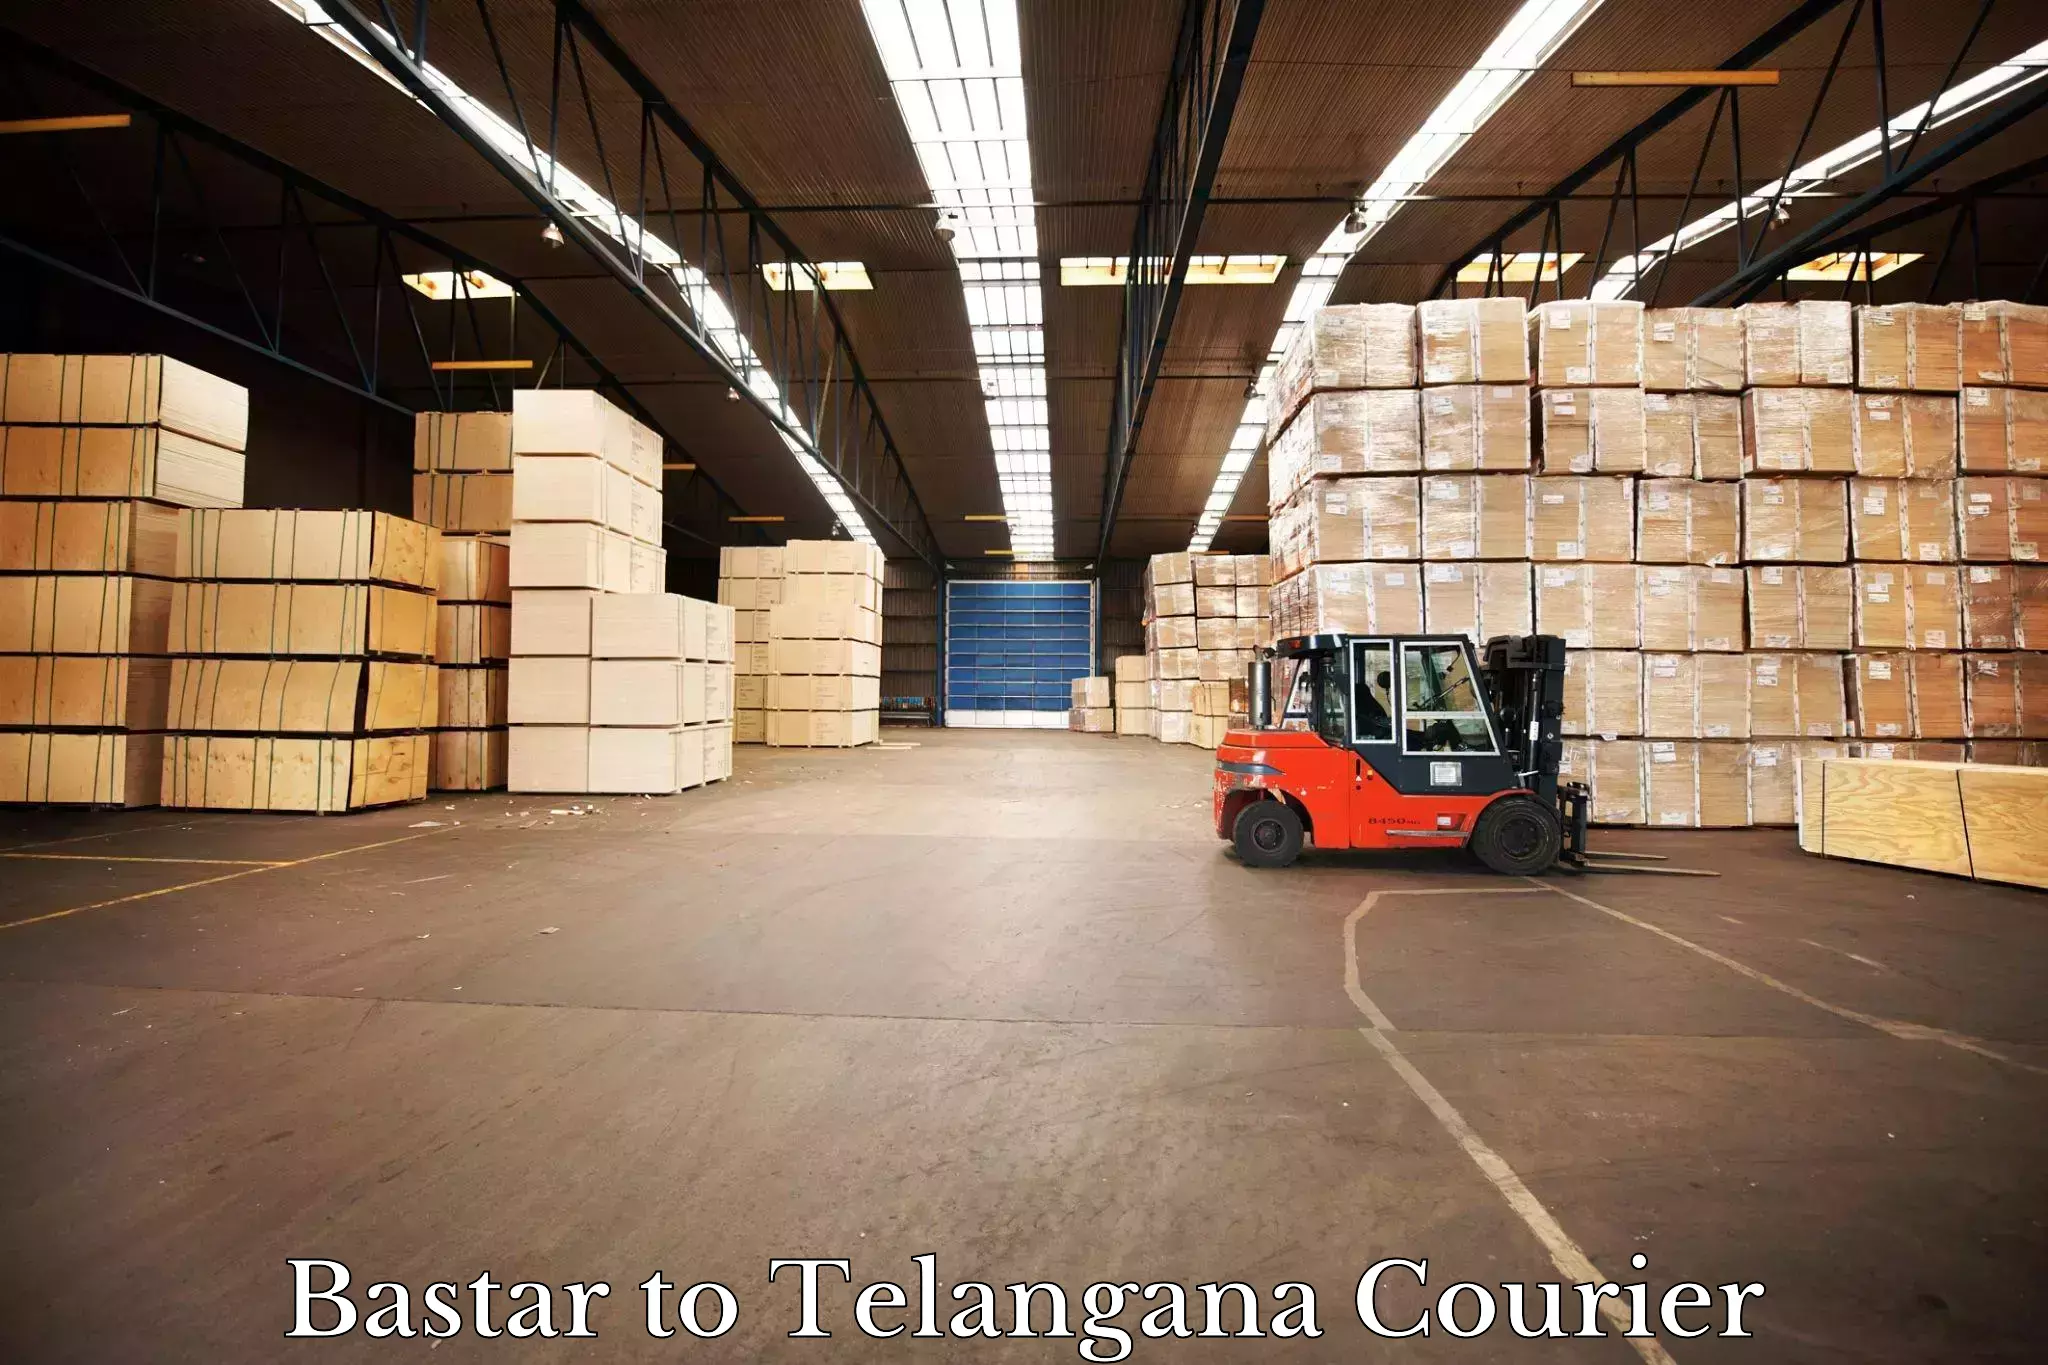 Reliable logistics providers Bastar to Sathupally